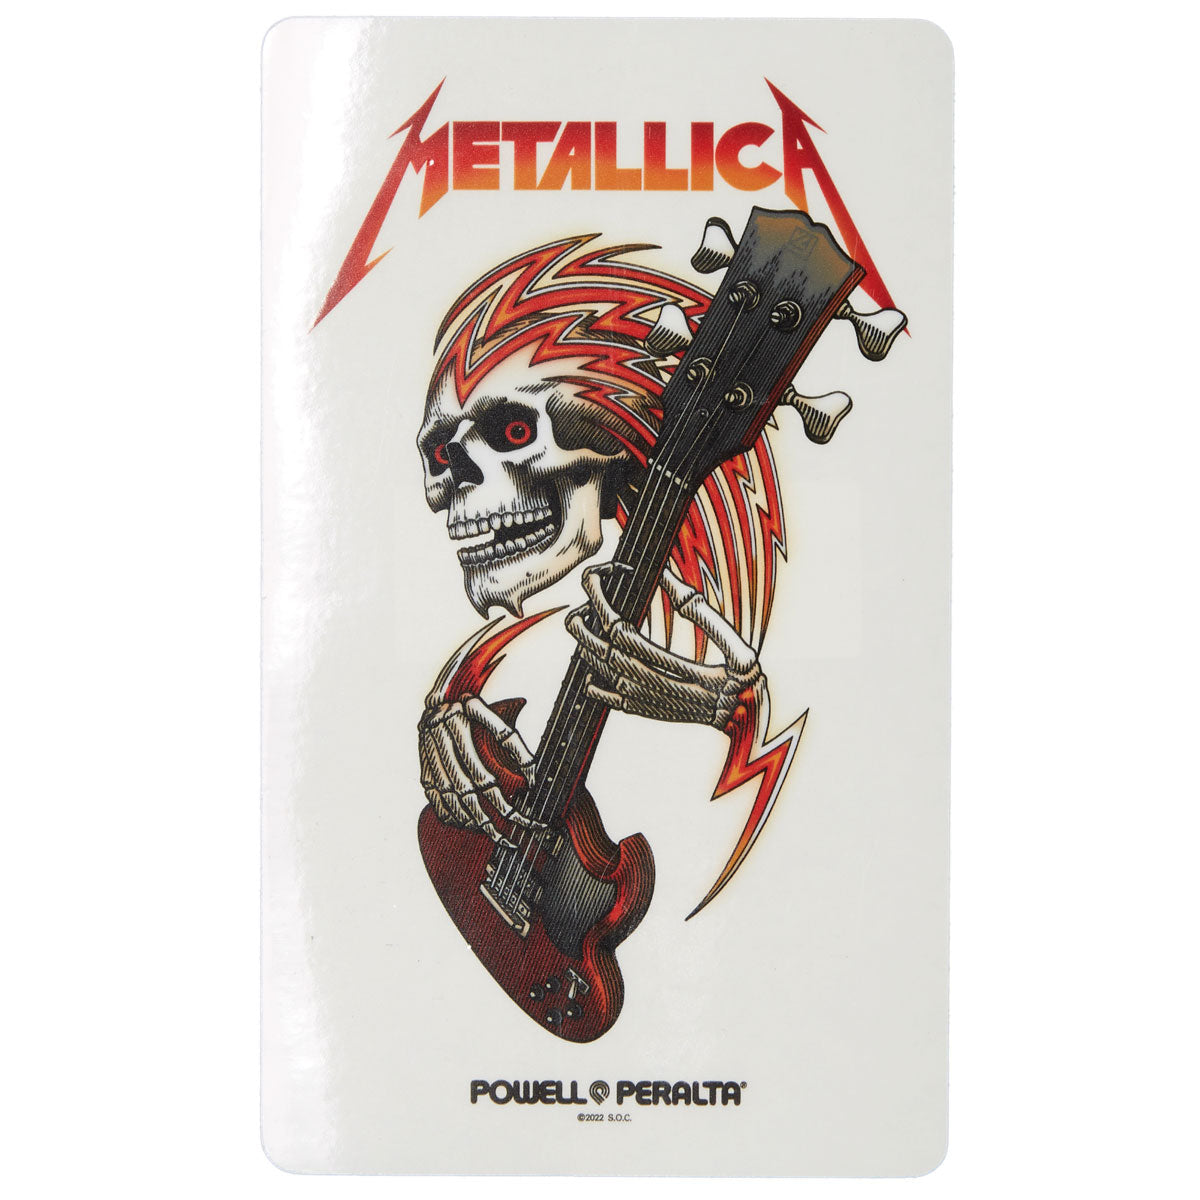 Powell Peralta x Metallica Collab Stickers image 1